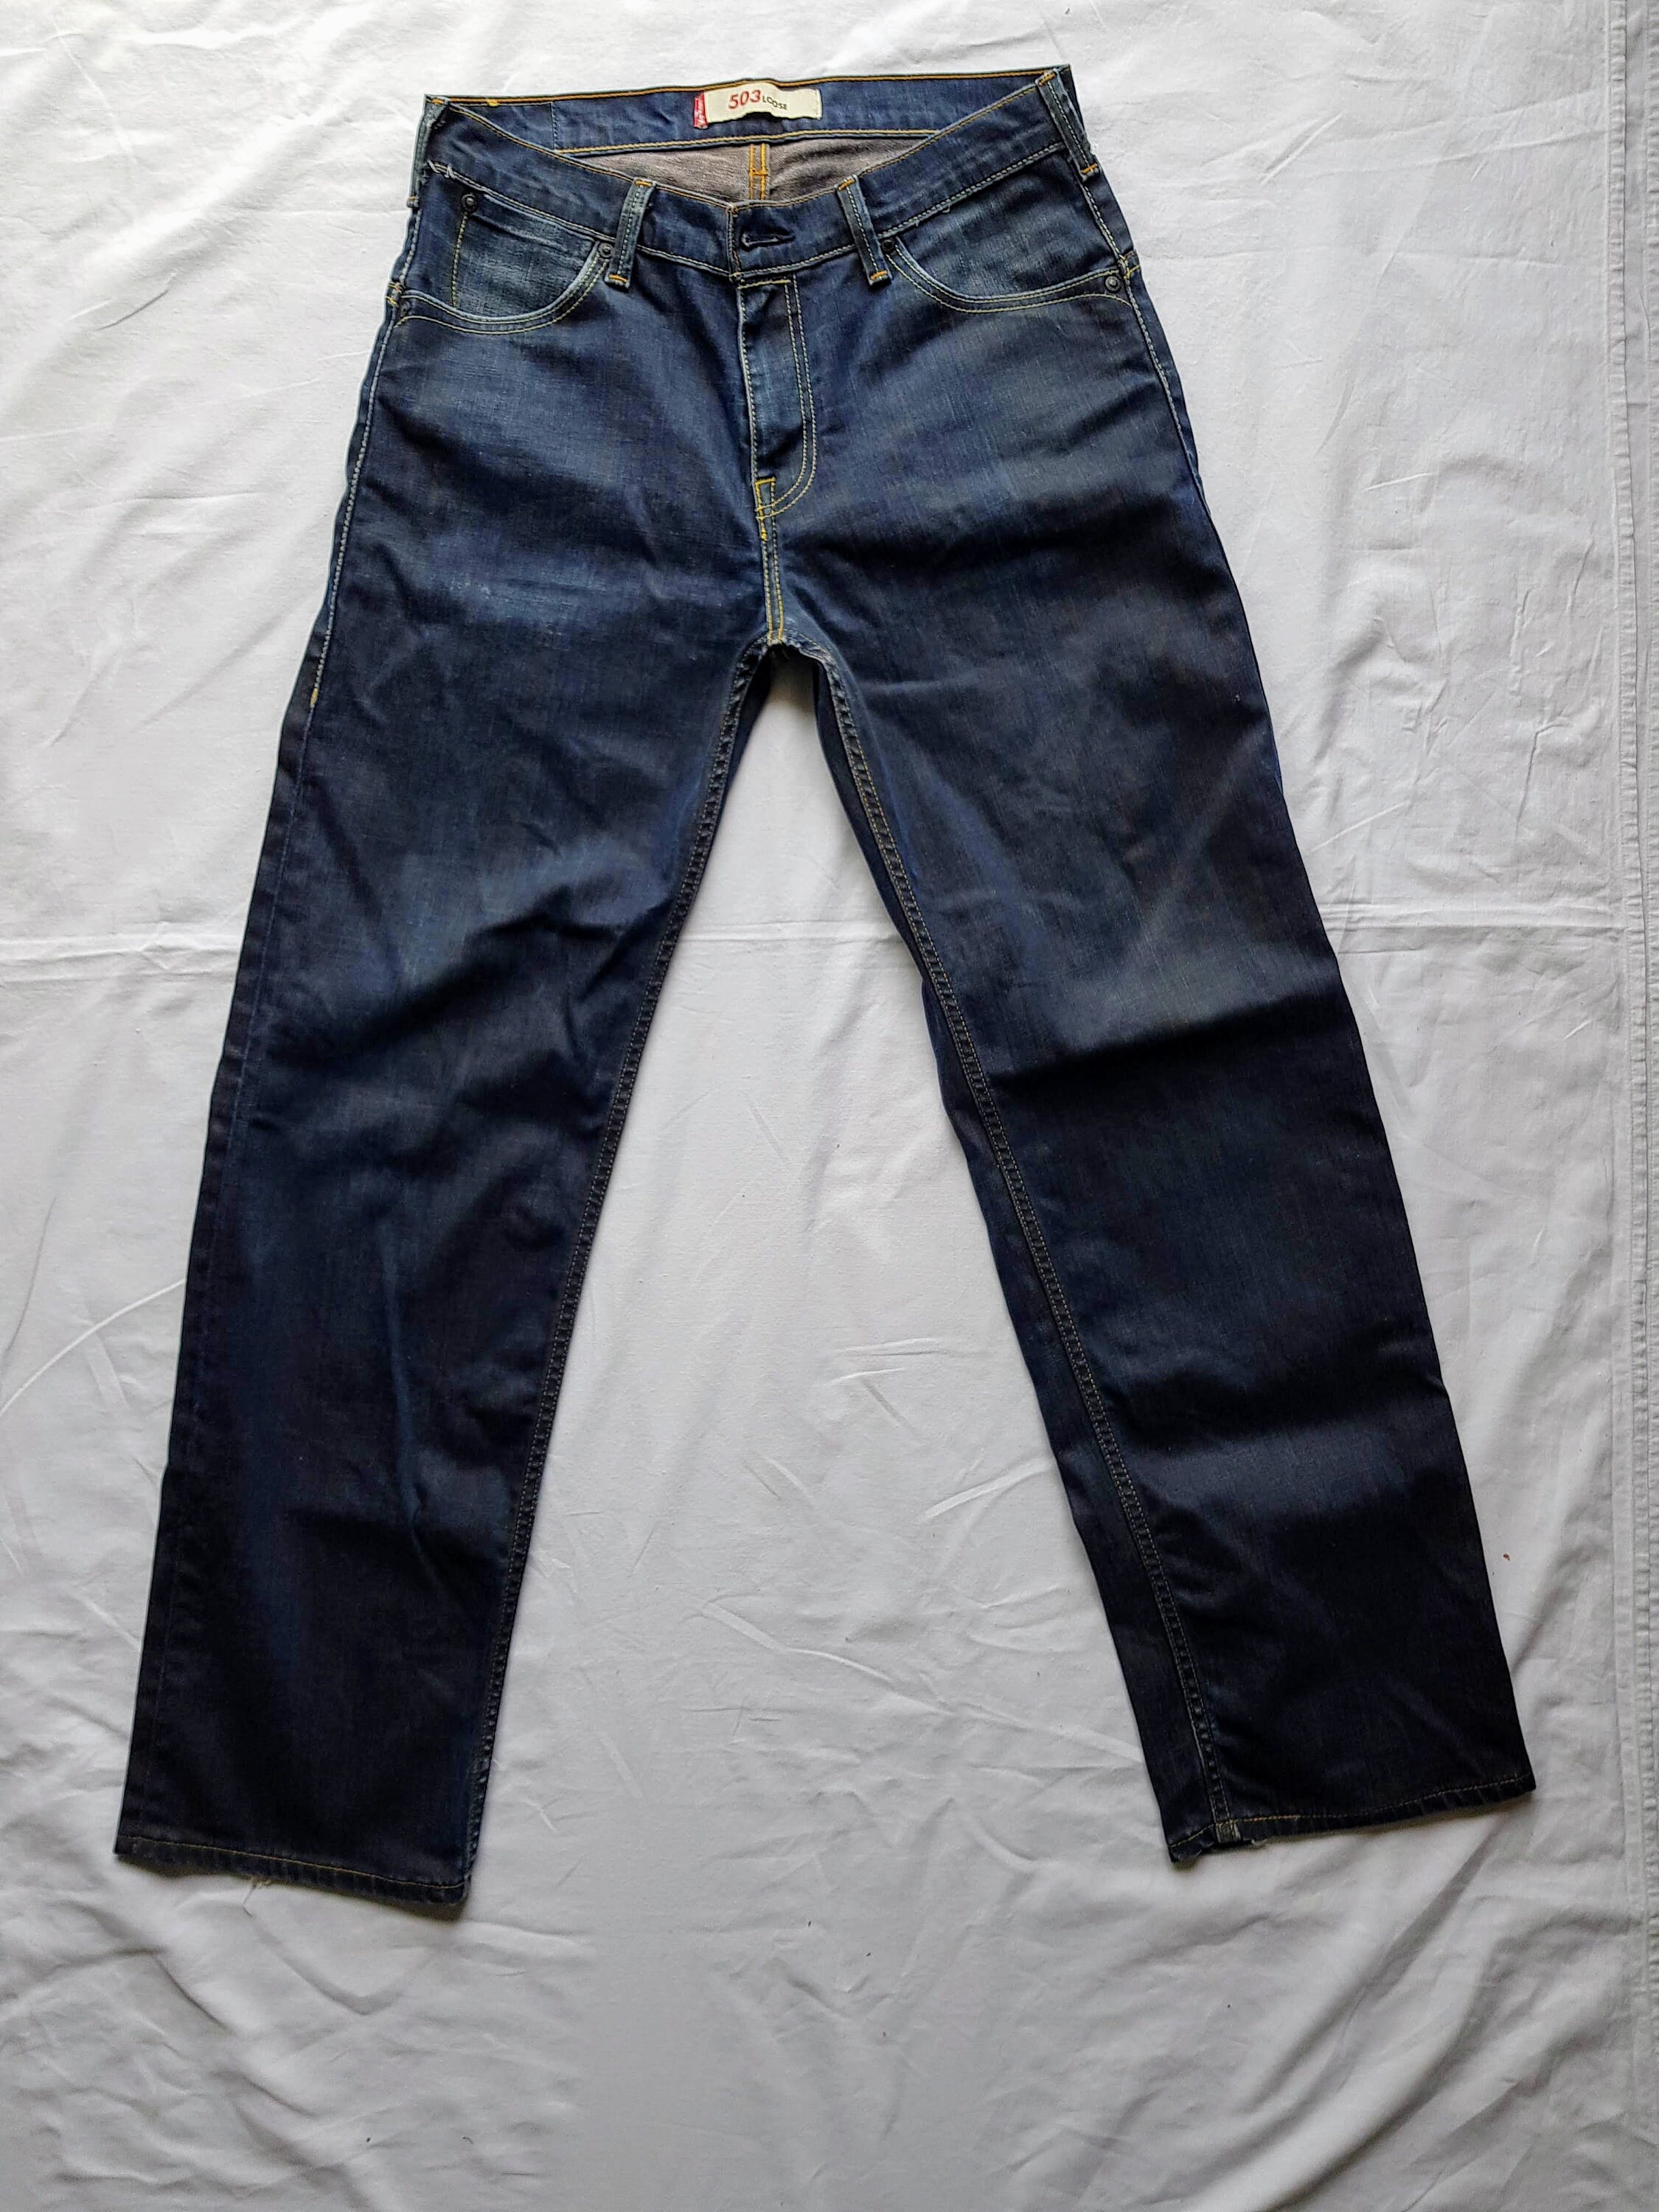 Levi Jeans 503 Denim Mens | Etsy